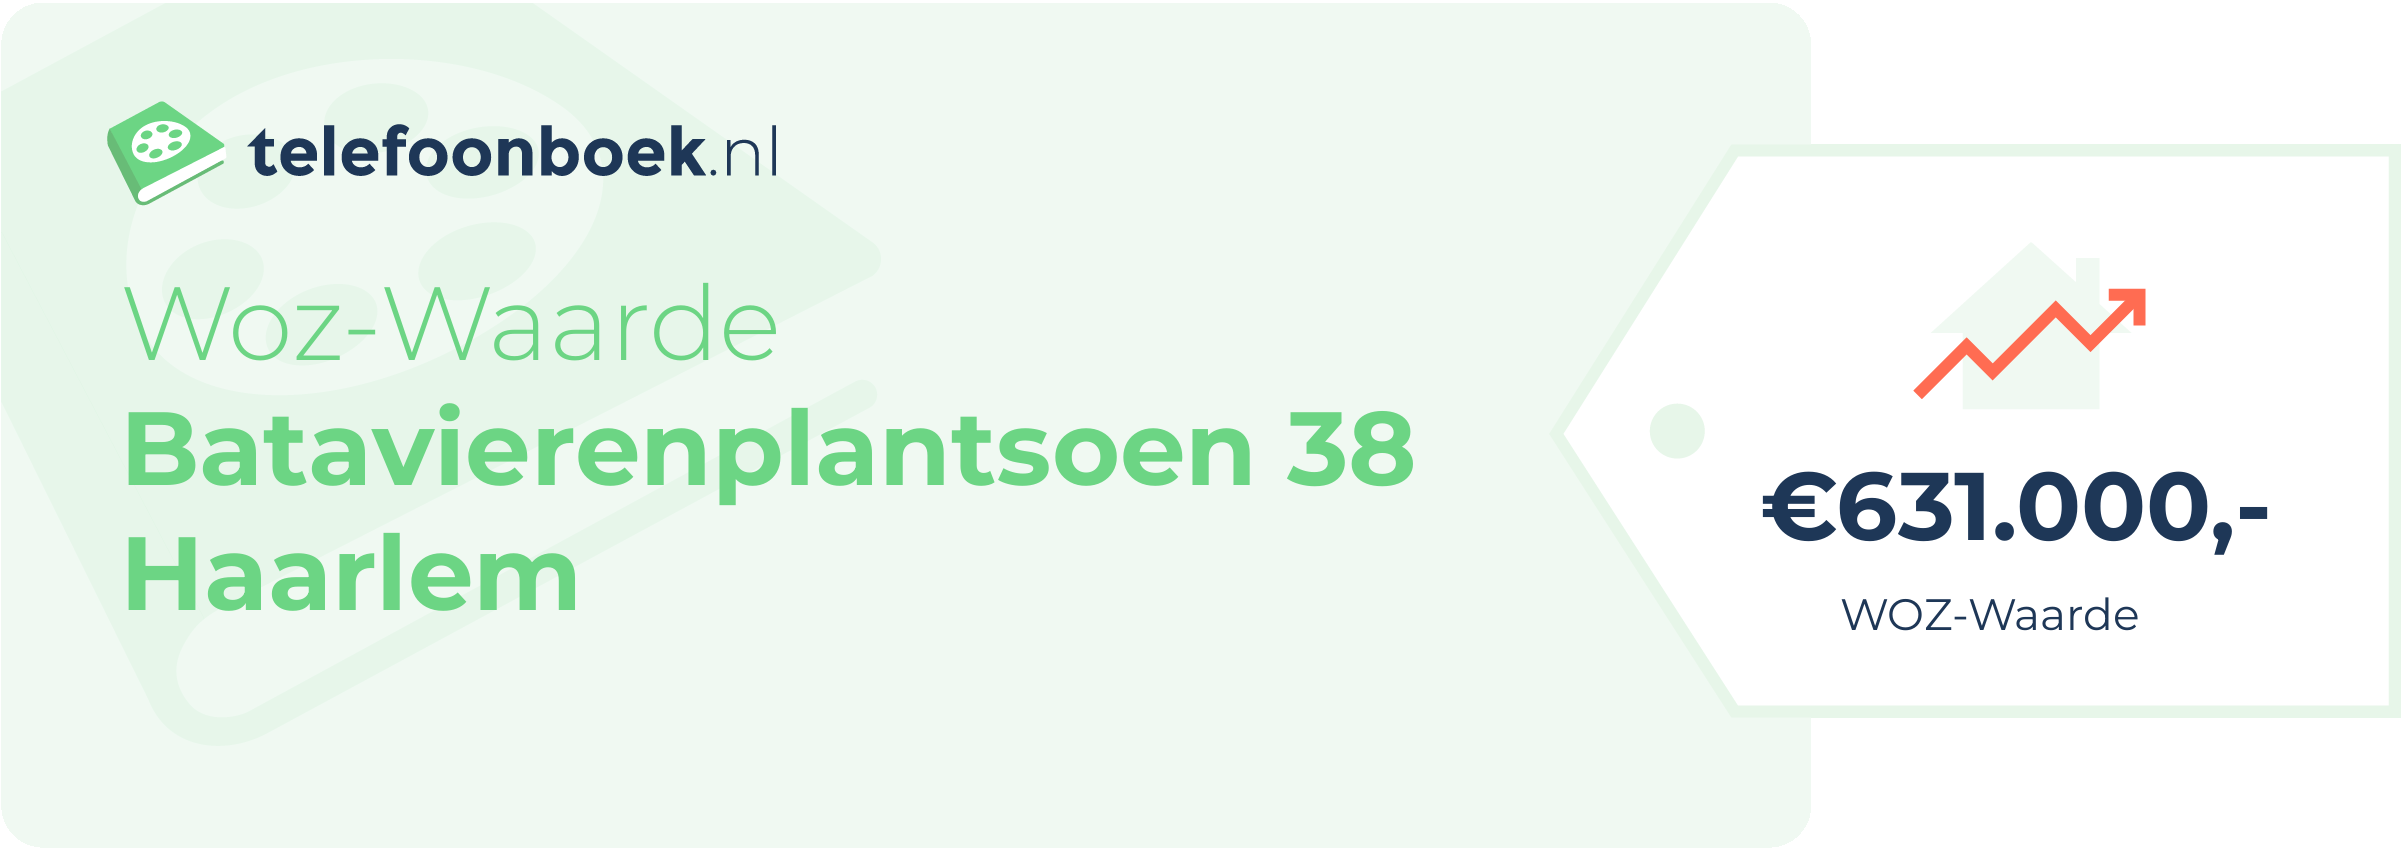 WOZ-waarde Batavierenplantsoen 38 Haarlem